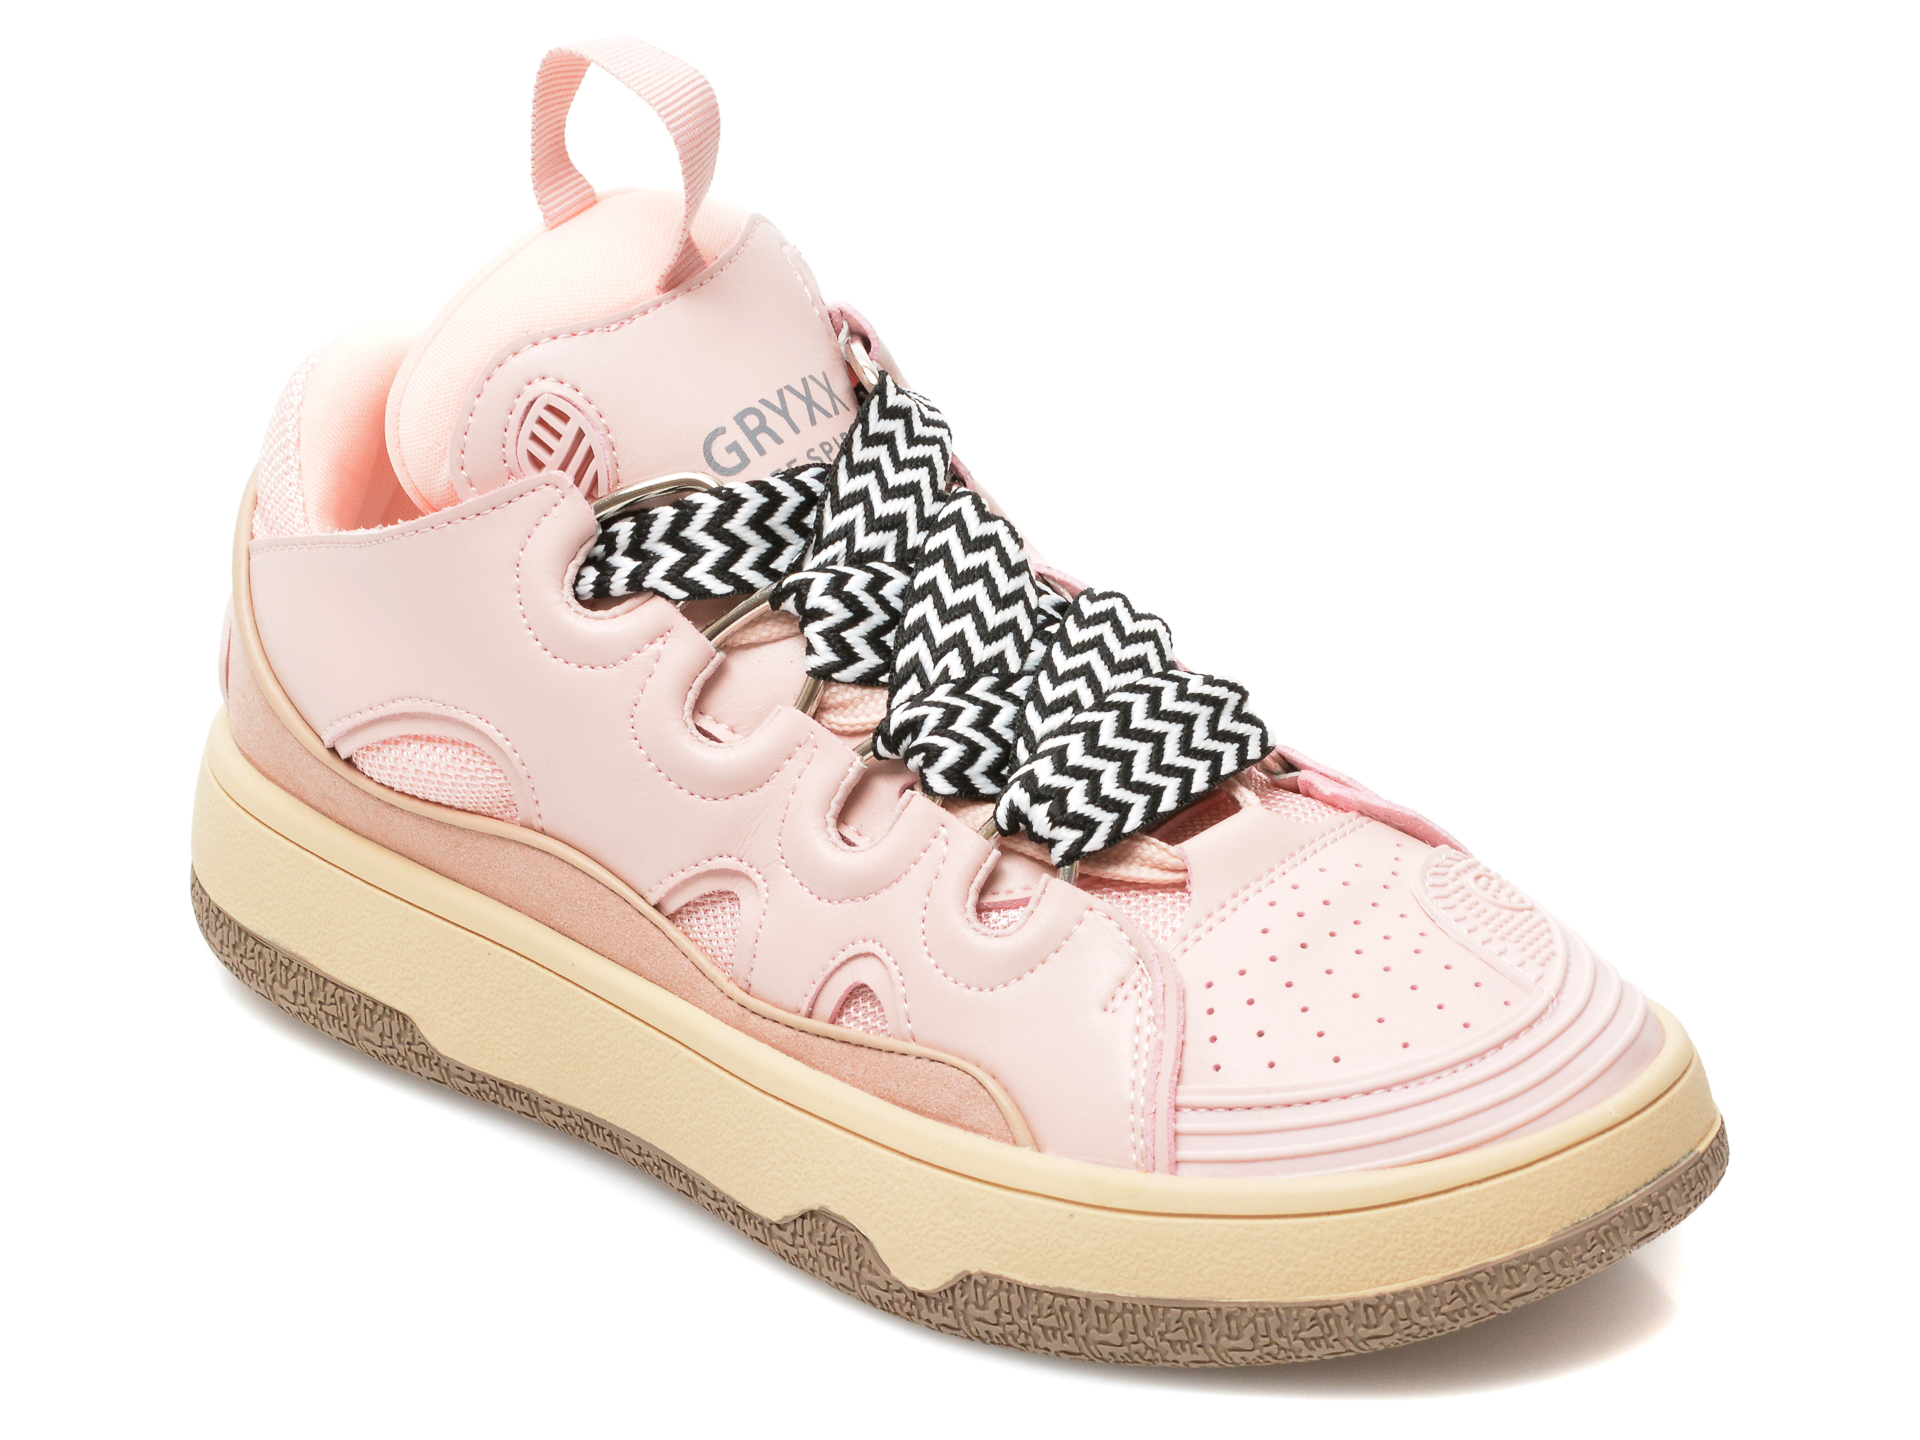 Pantofi sport GRYXX roz, Q2153, din material textil si piele naturala Gryxx Gryxx